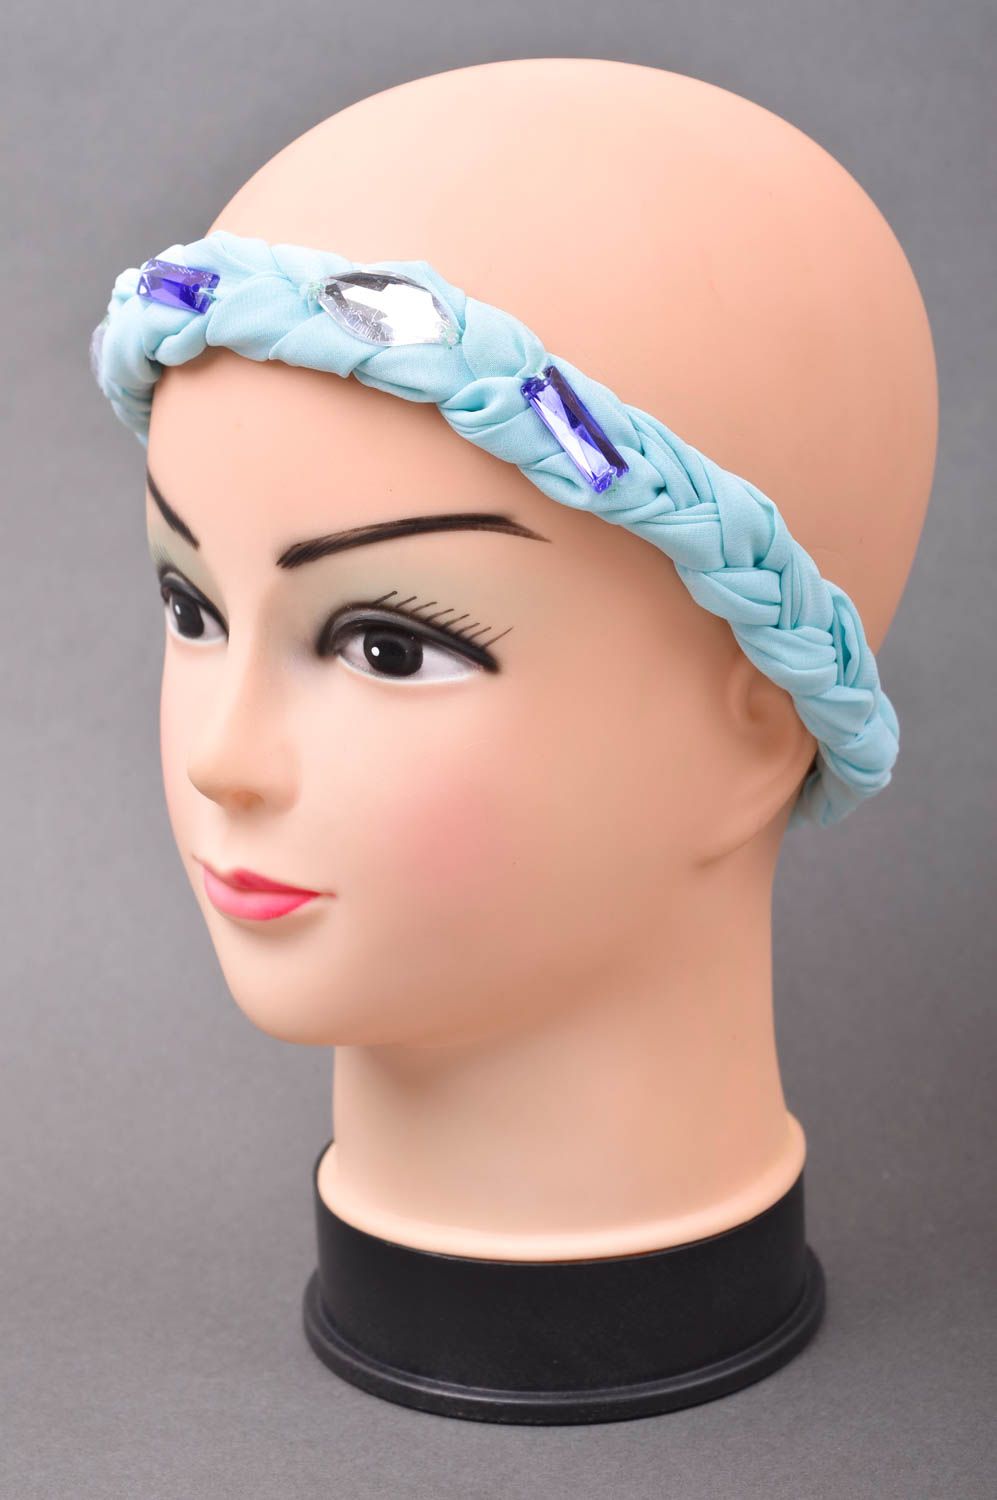 Homemade hair accessories girls headband hair decorations best gifts for women photo 1